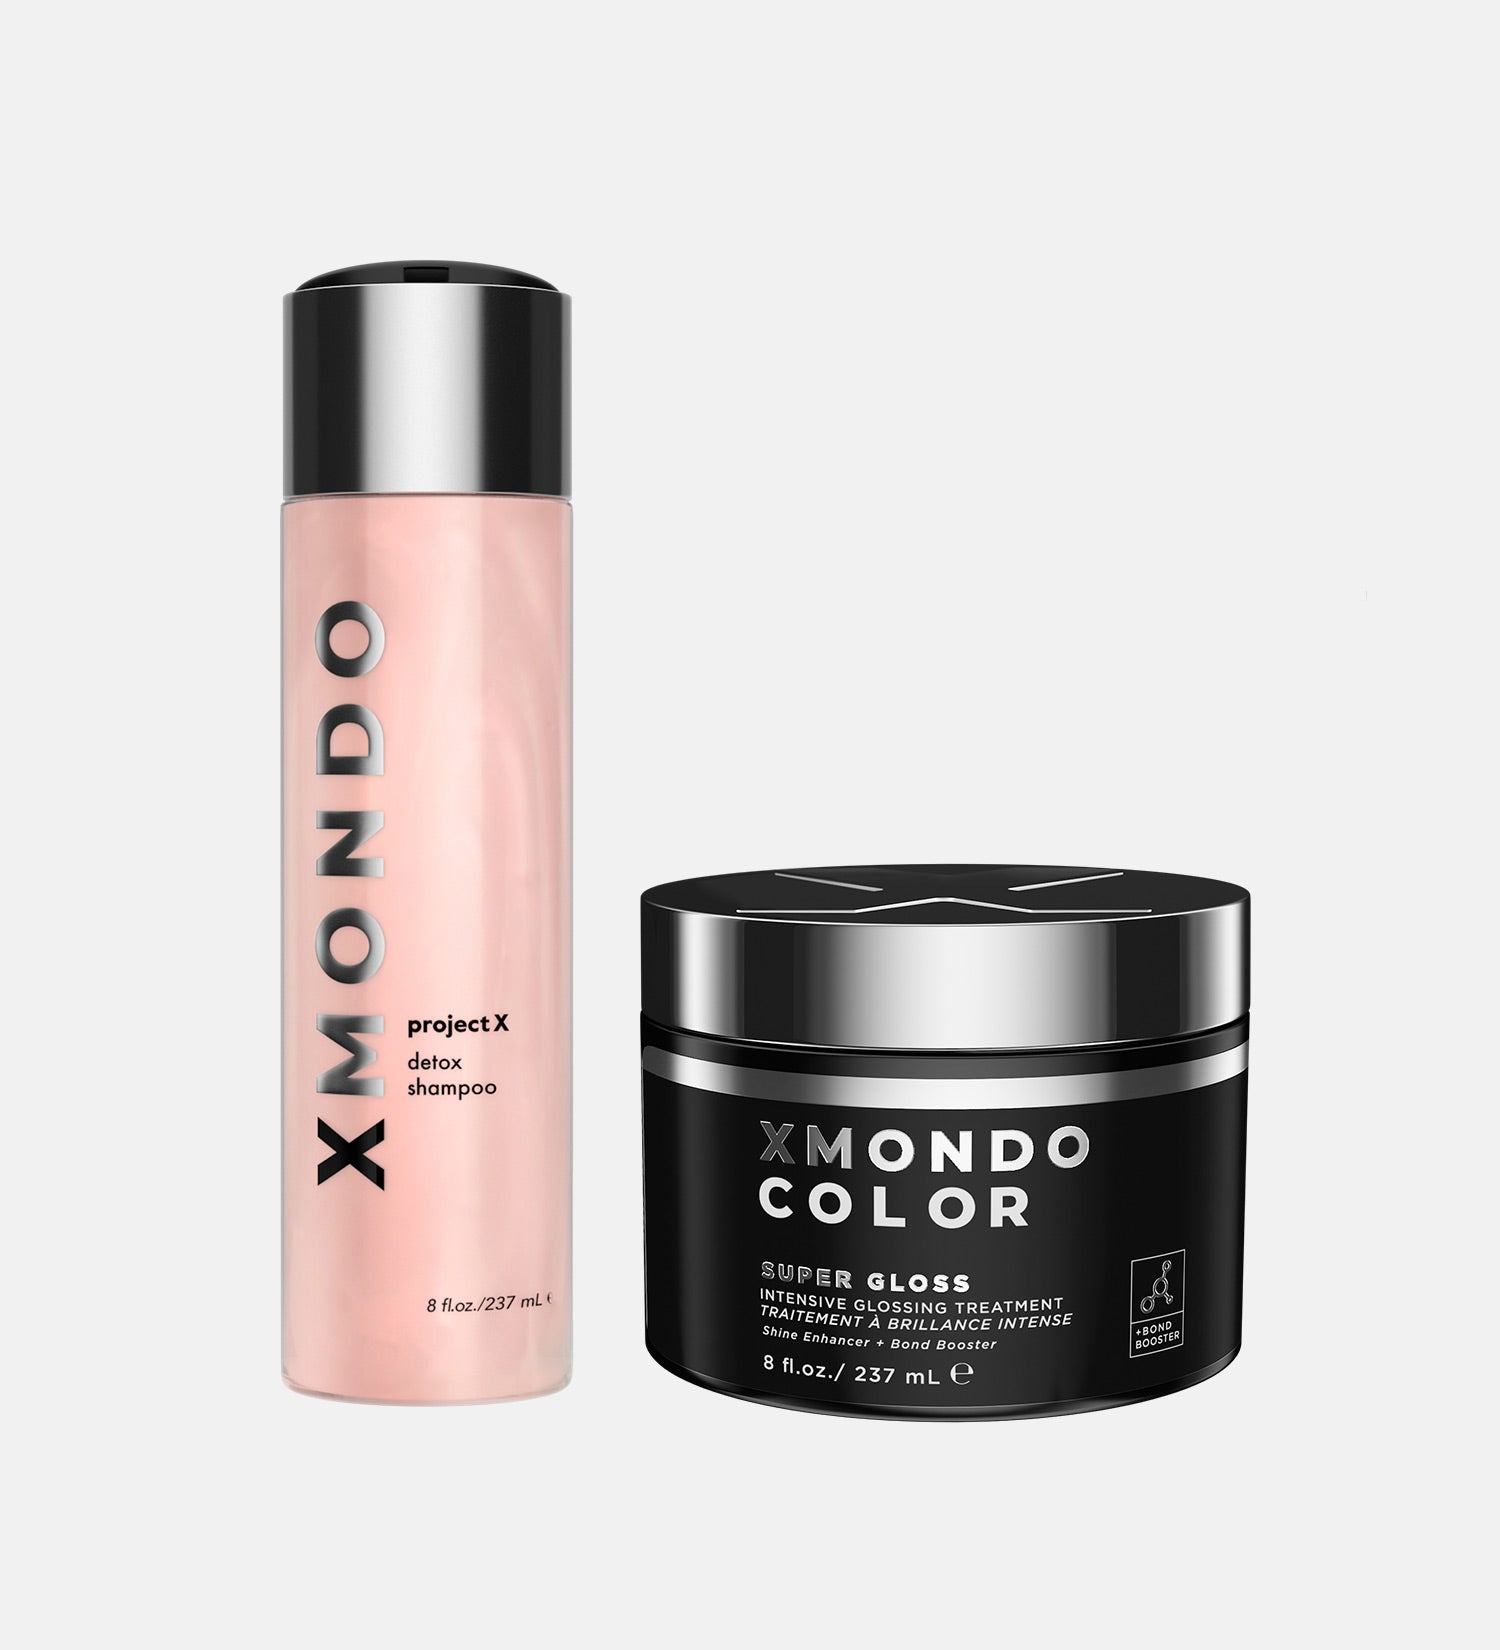 Bundle for Ultimate Shine – XMONDO HAIR